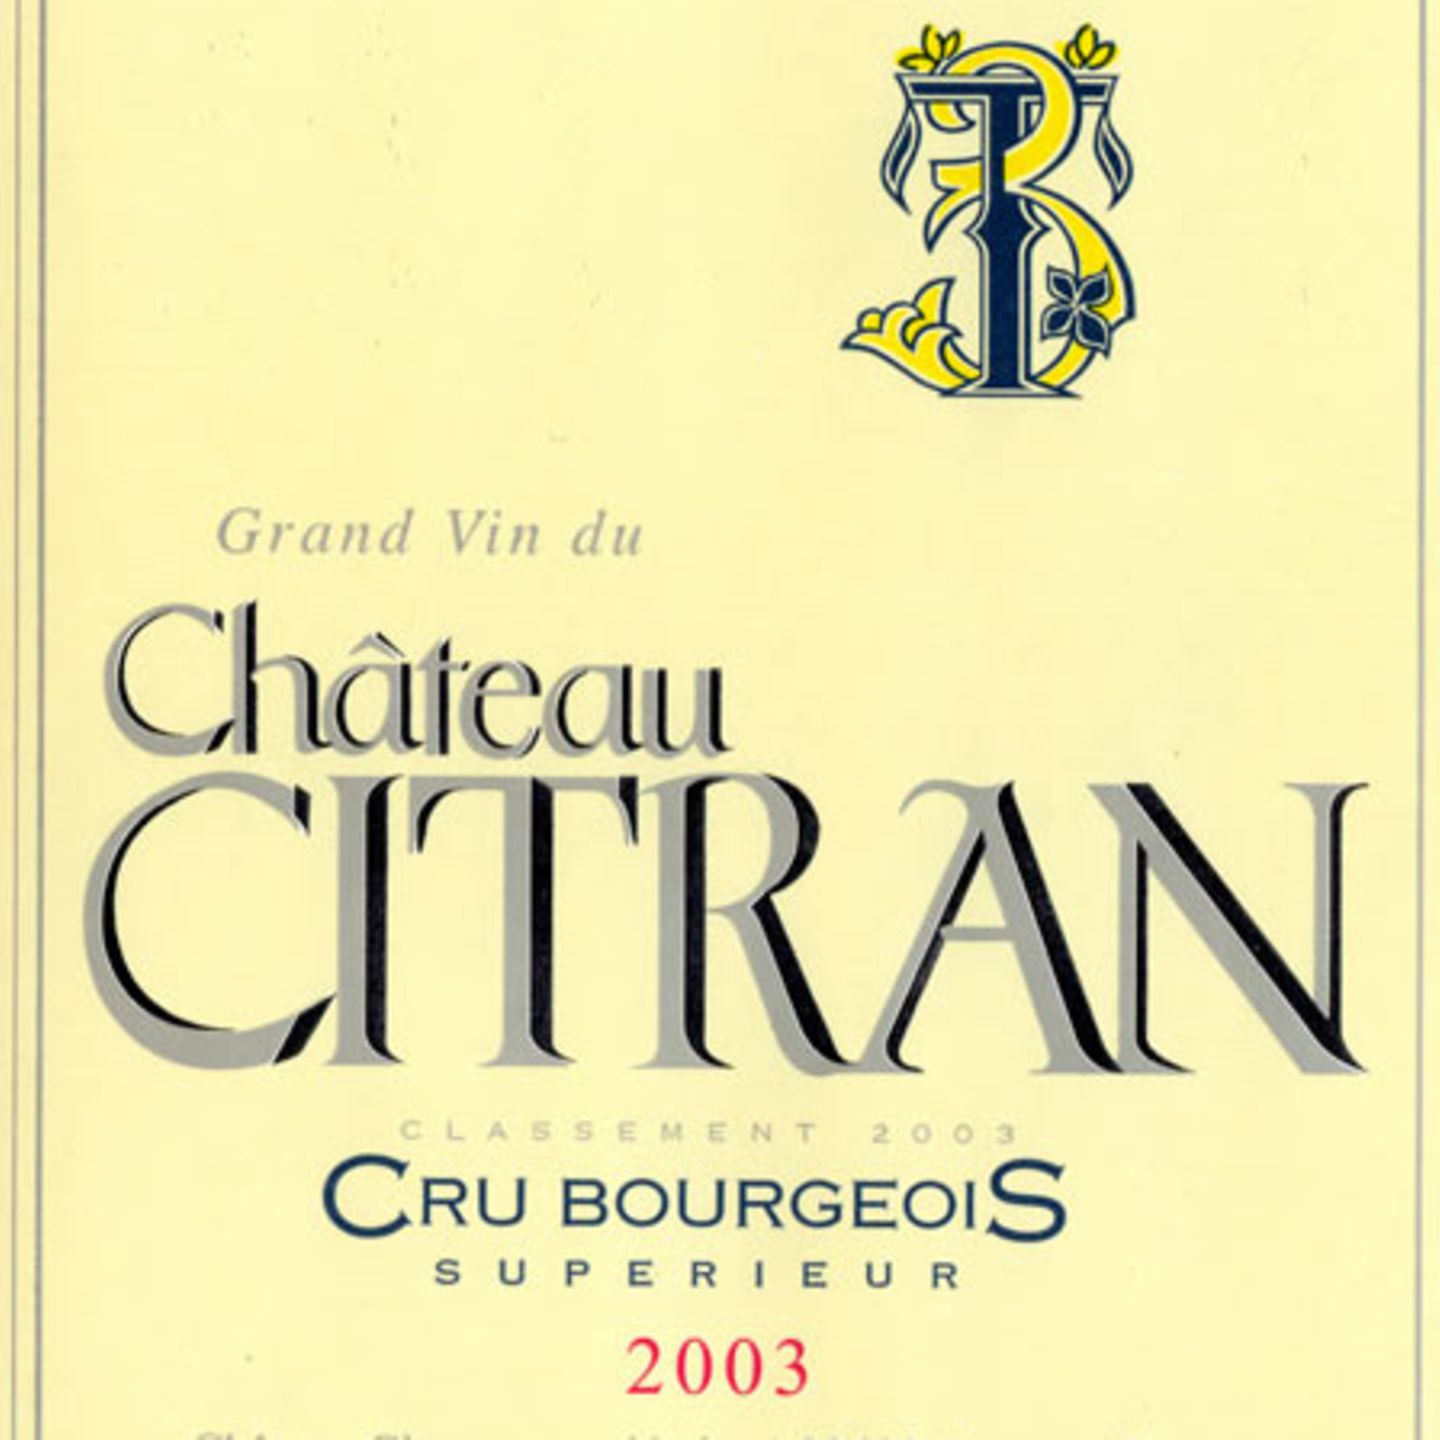 Château Citran Crus Bourgeois Superieur 2003